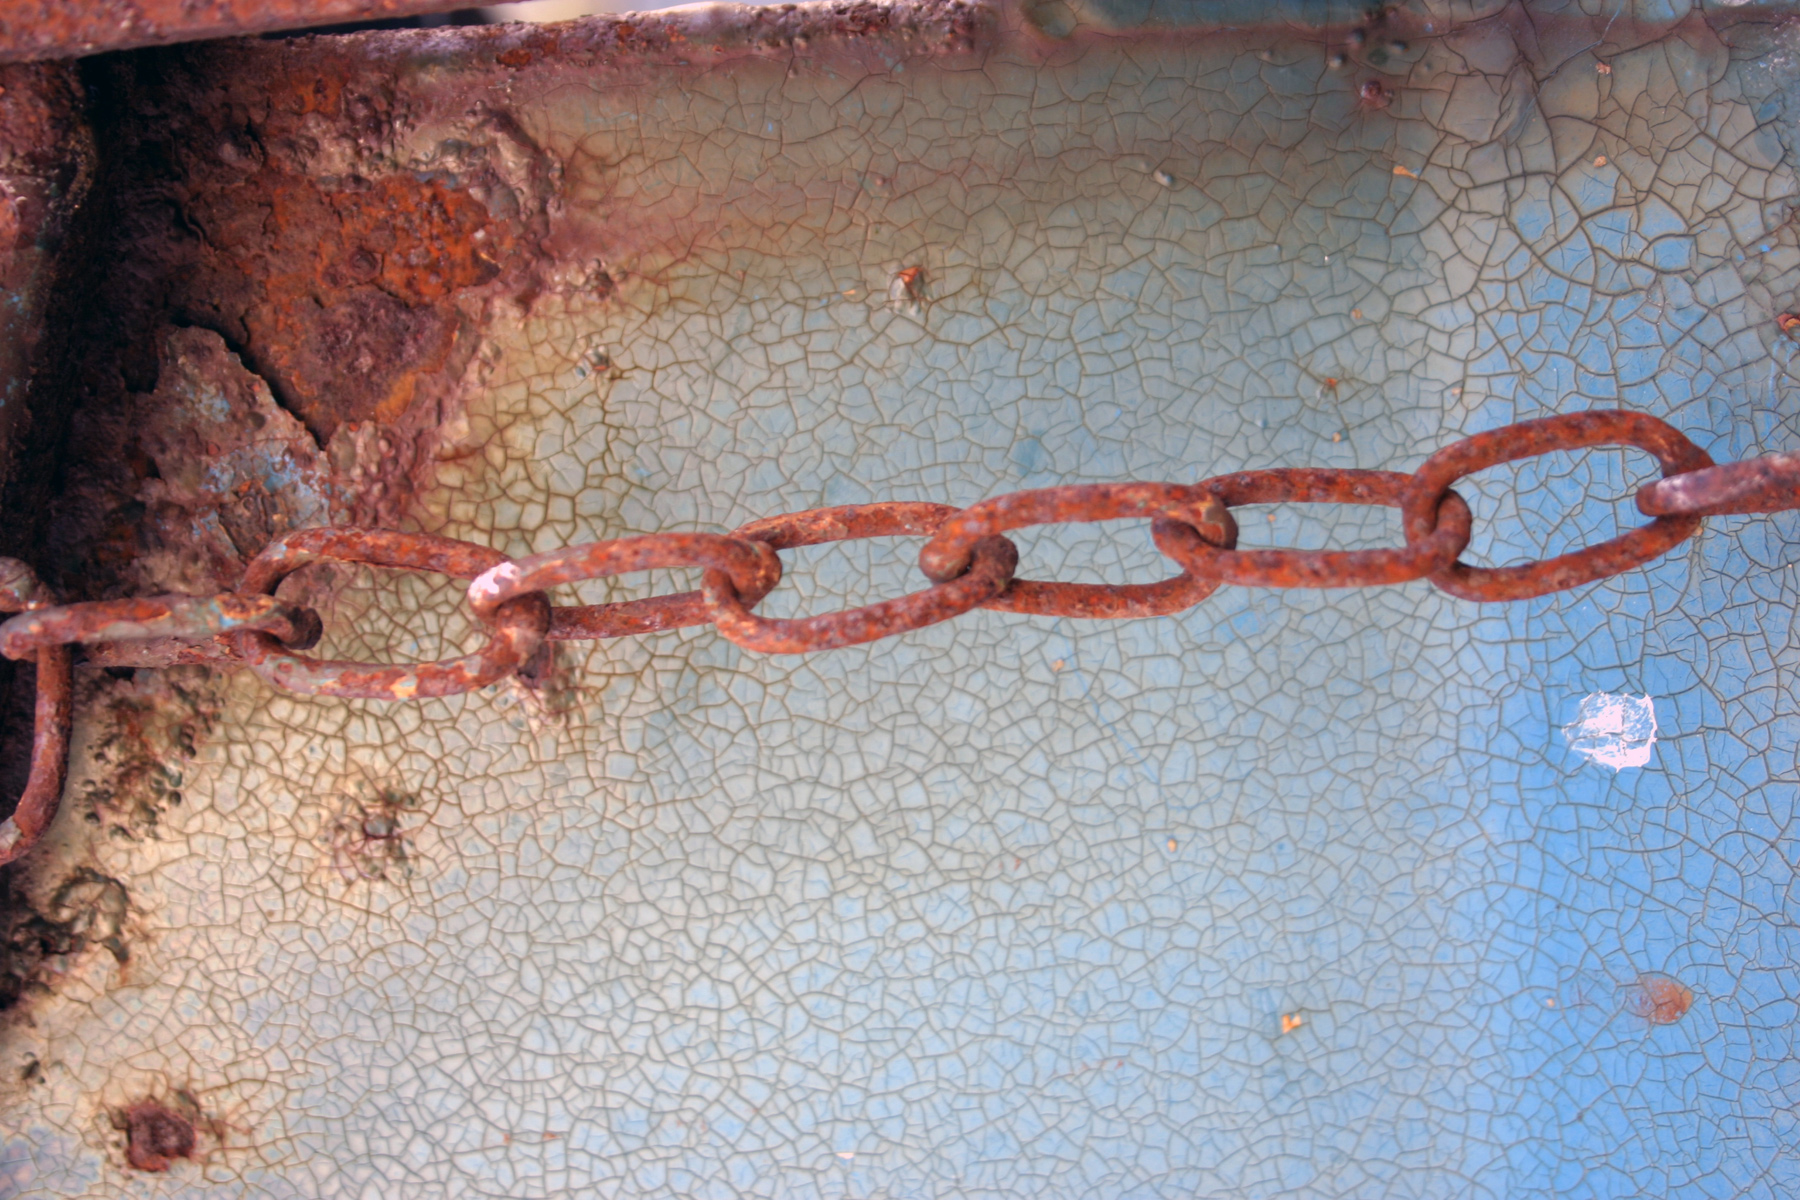 Rusted metal chain photo